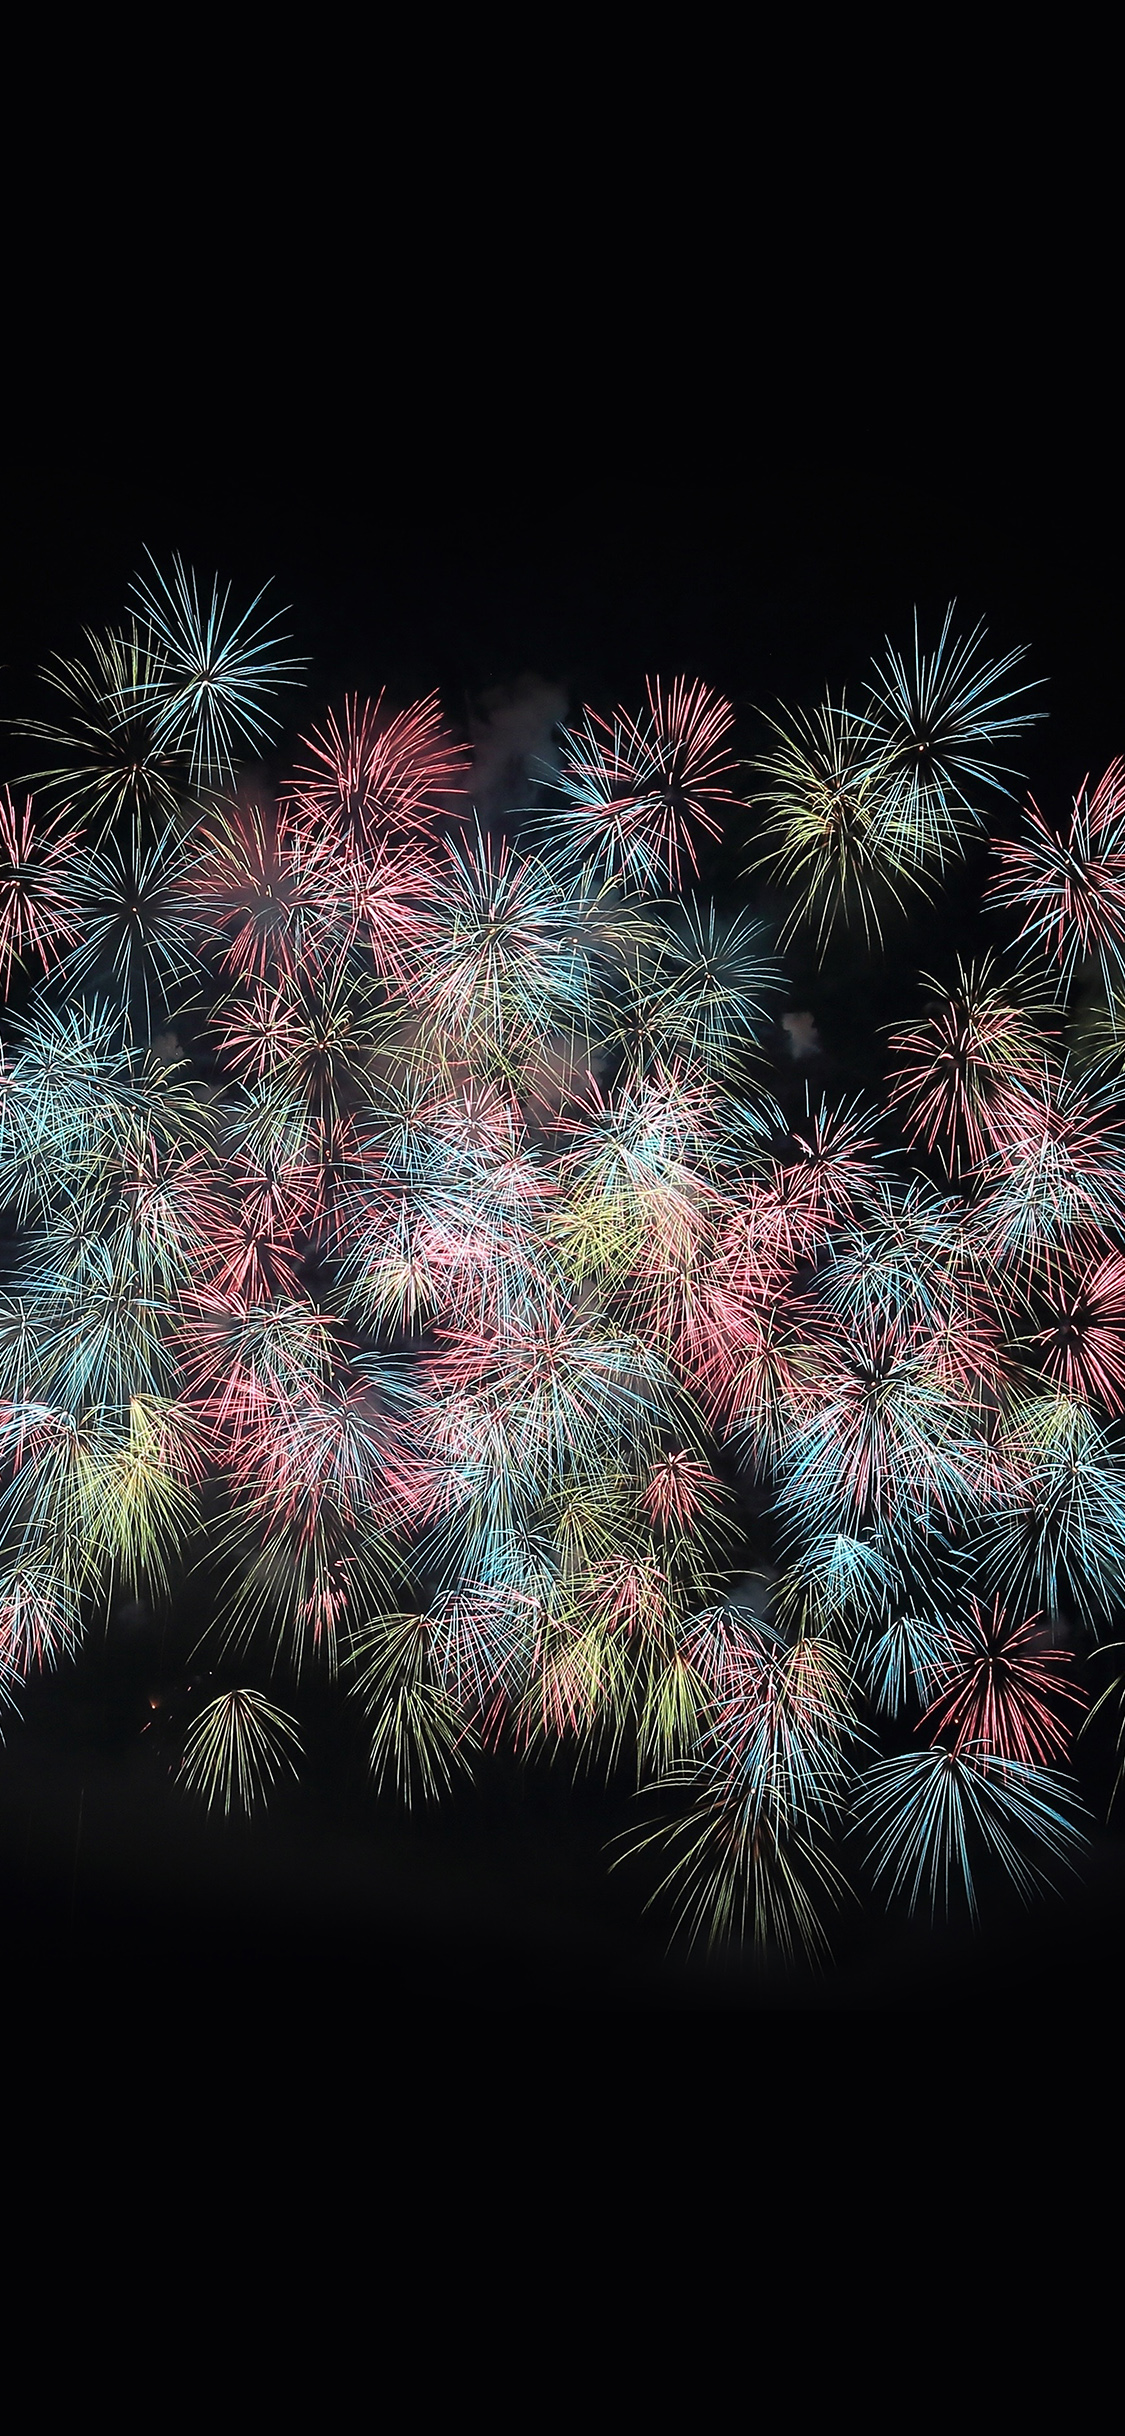 iPhone X wallpaper. firework art pastel night dark